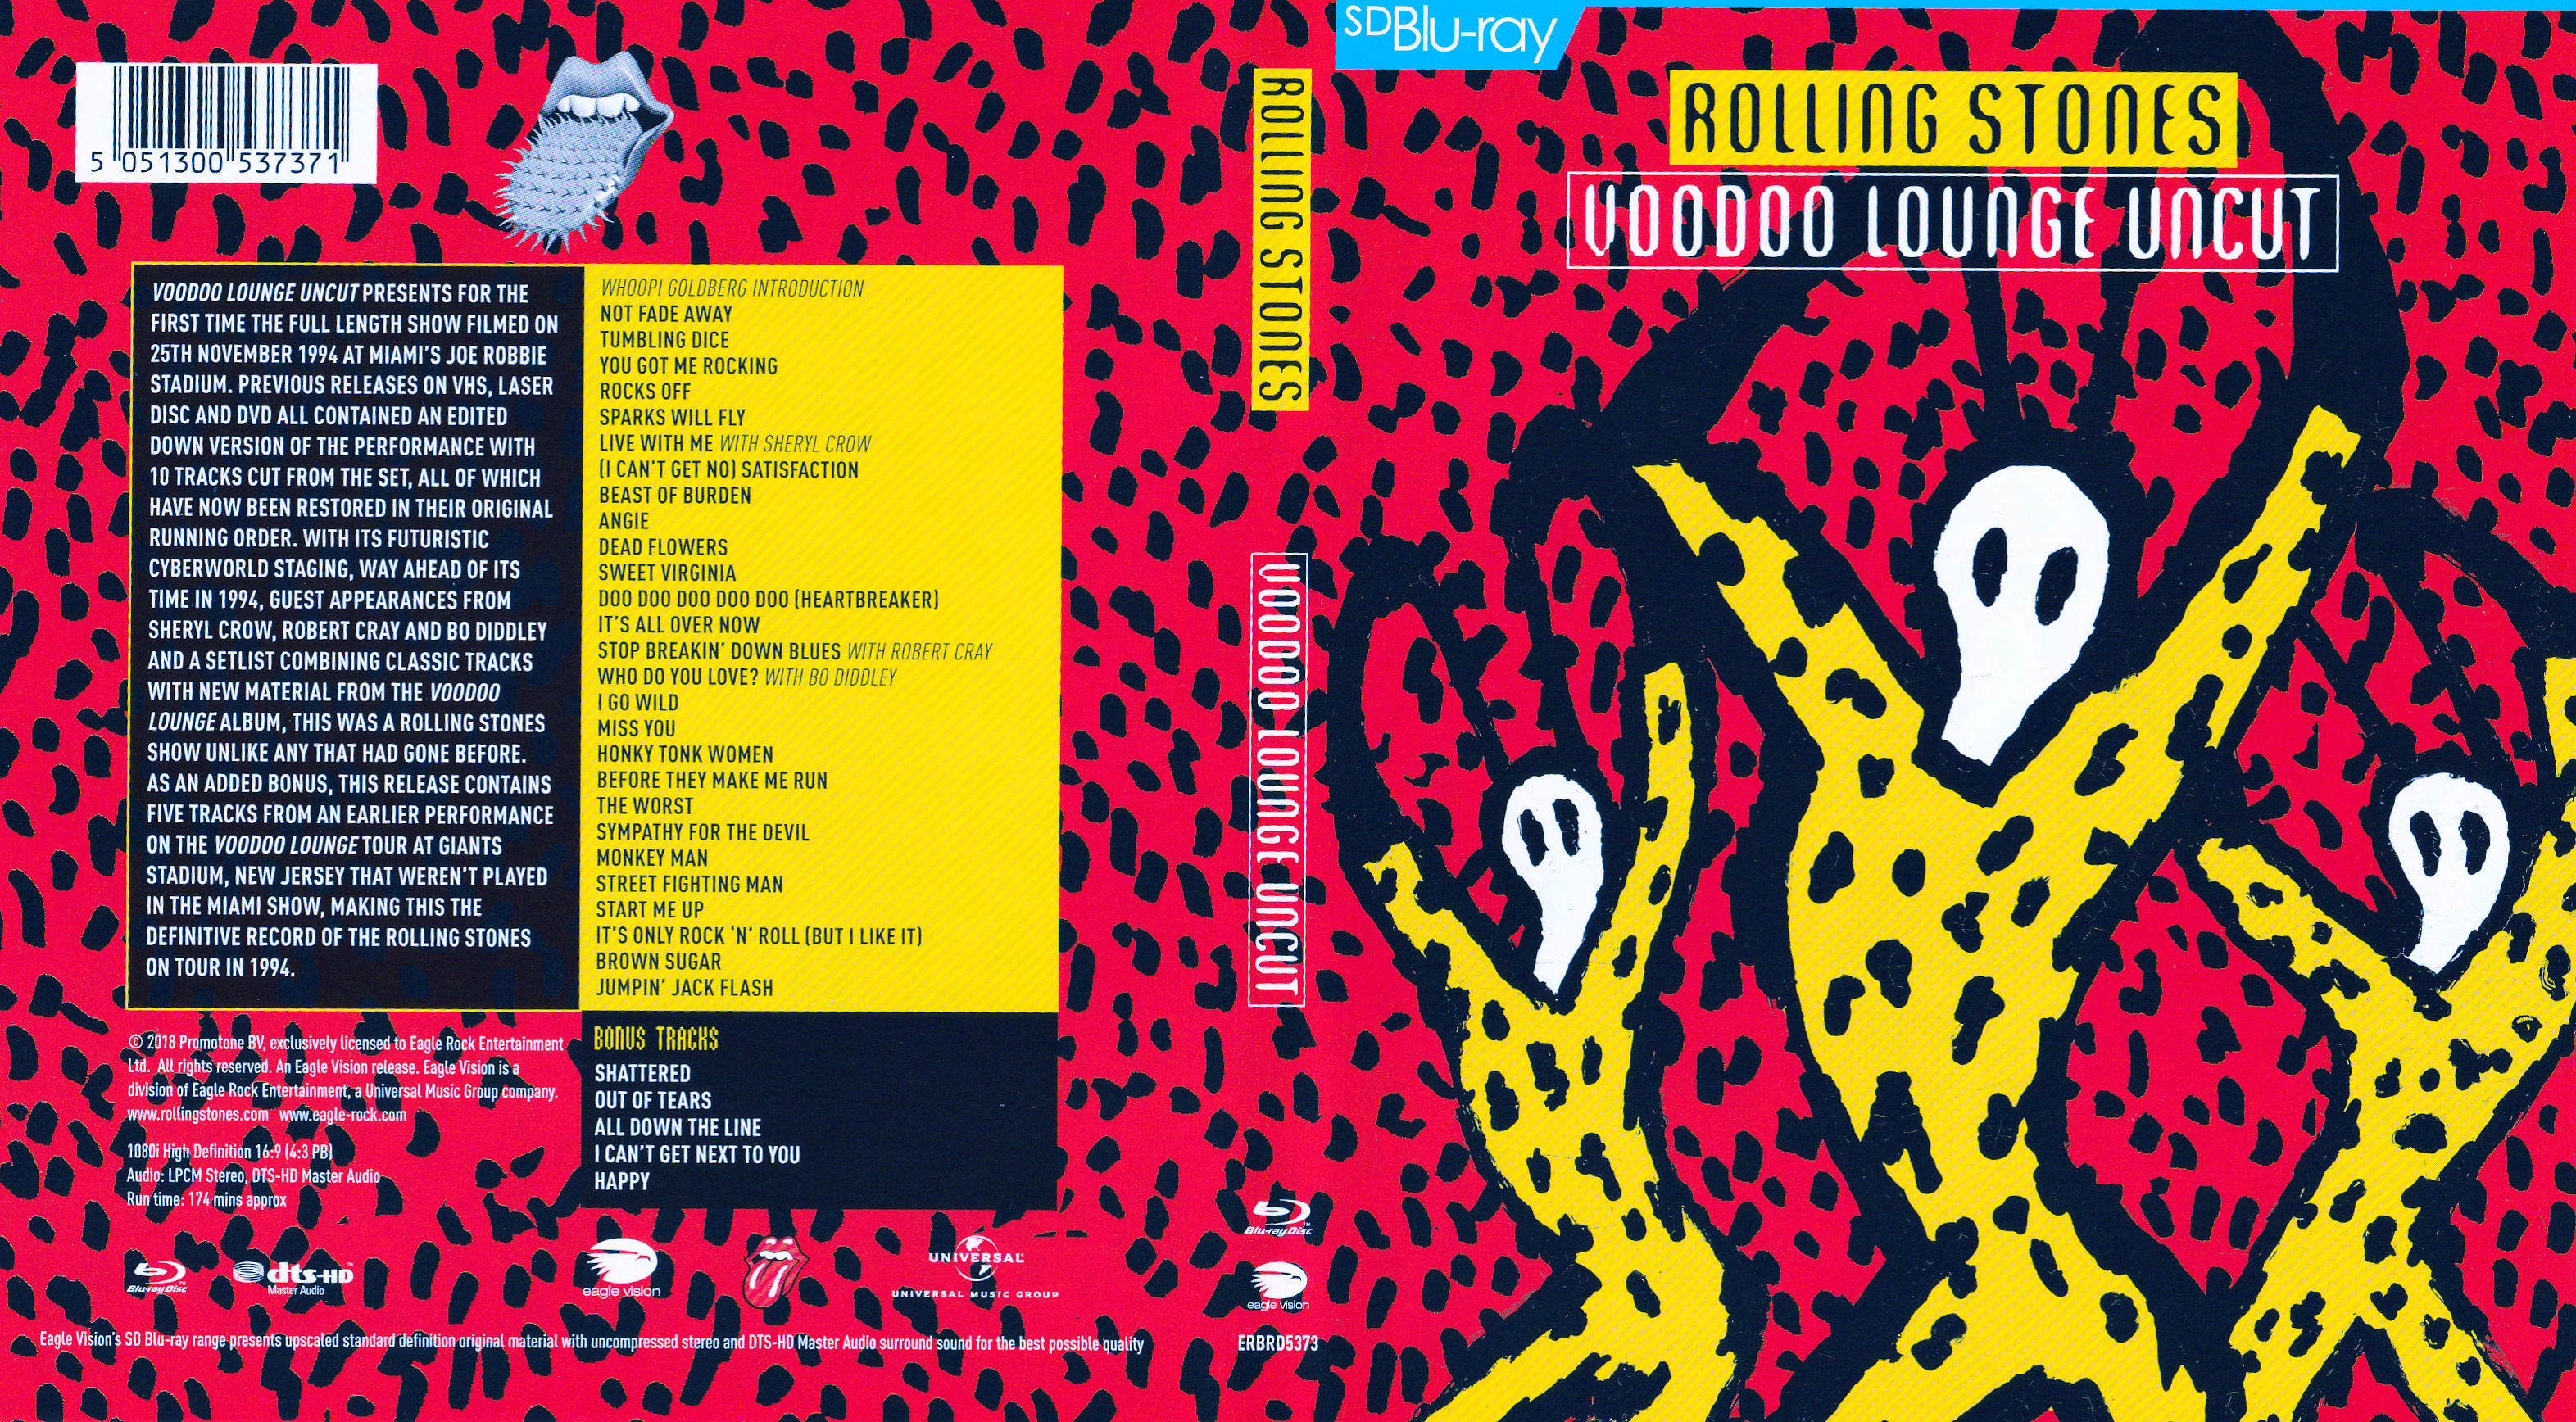 Jaquette DVD Rolling Stone Voodoo lounge Uncut (BLU-RAY)